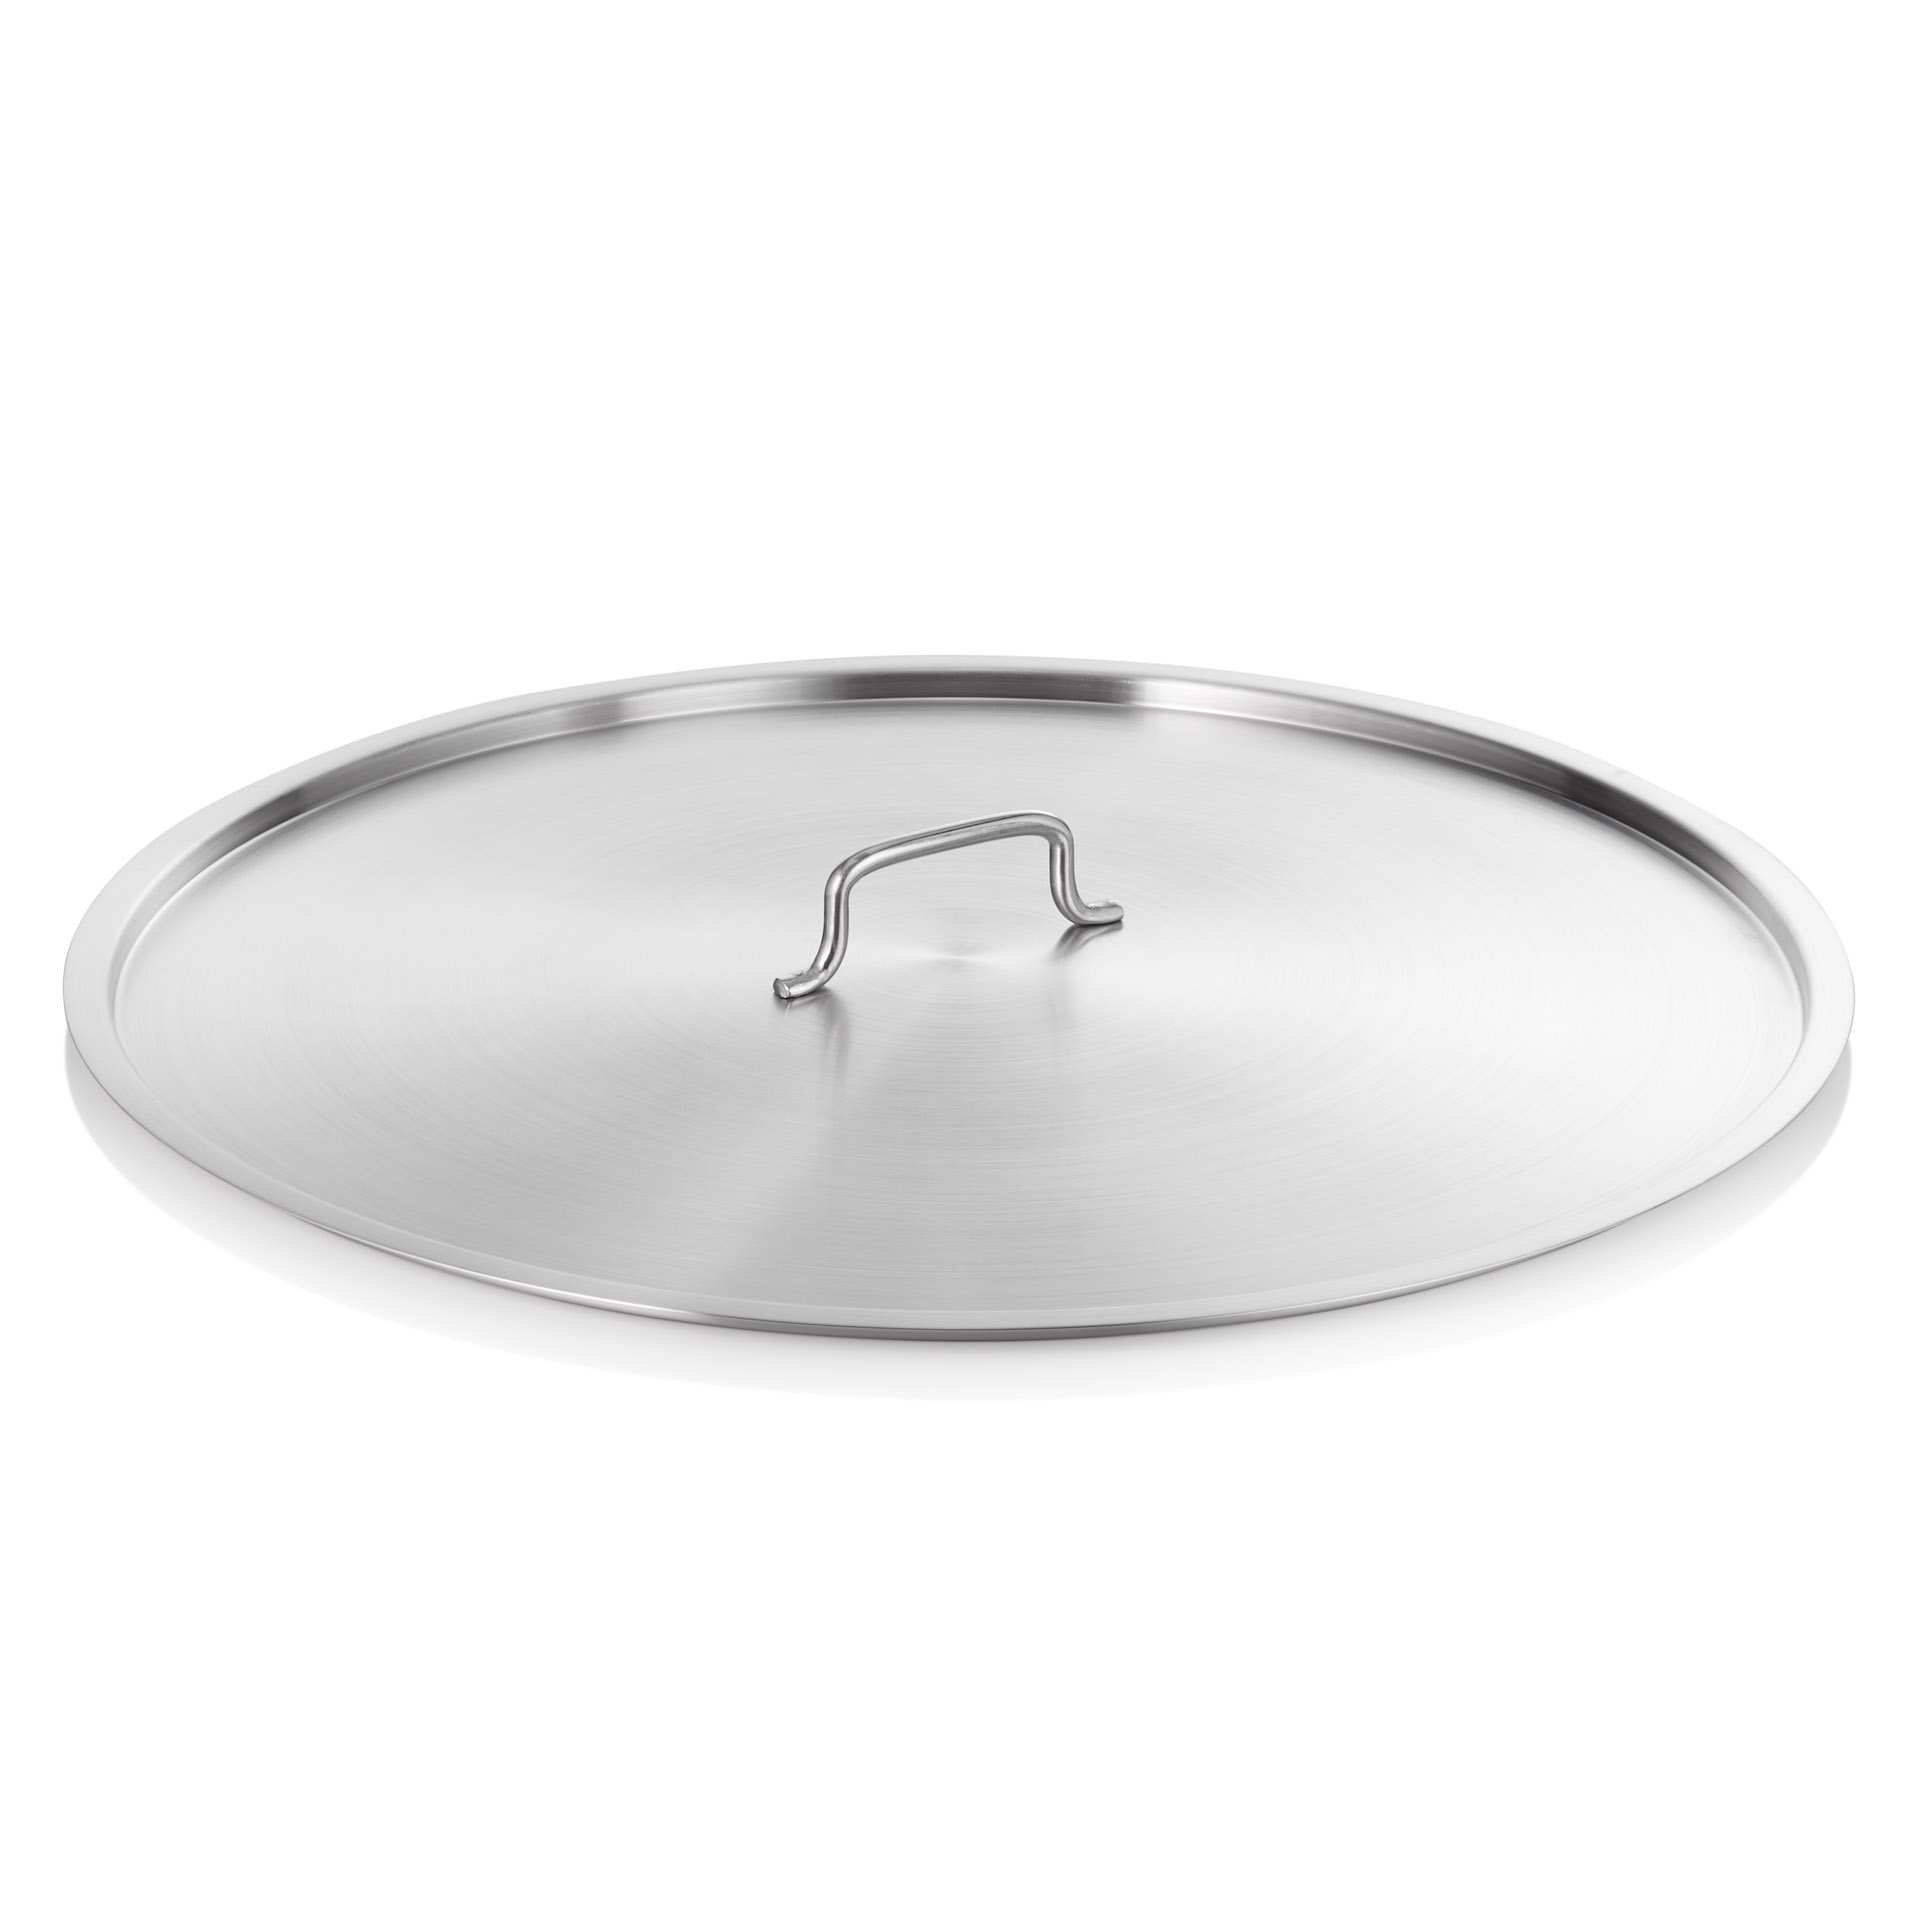 Deckel - Serie Cookware - rund - Ø 50 cm - Chromnickelstahl - 2161500-A